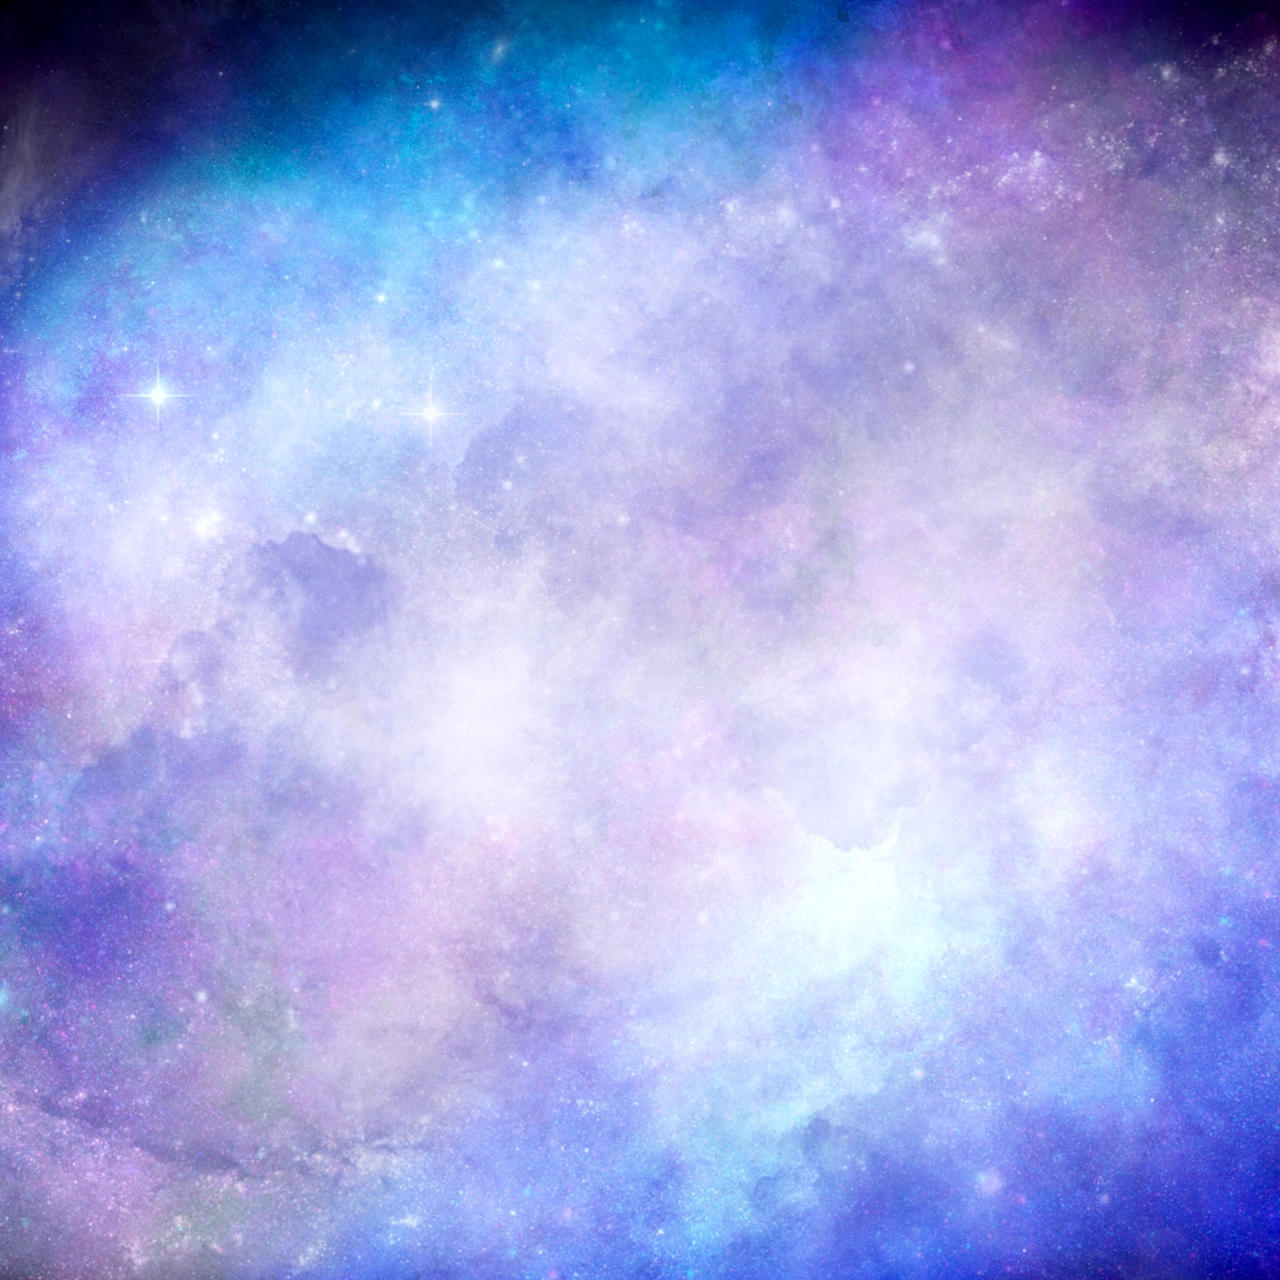 Galaxy Theme Background 6 by stardustnserendipity on DeviantArt